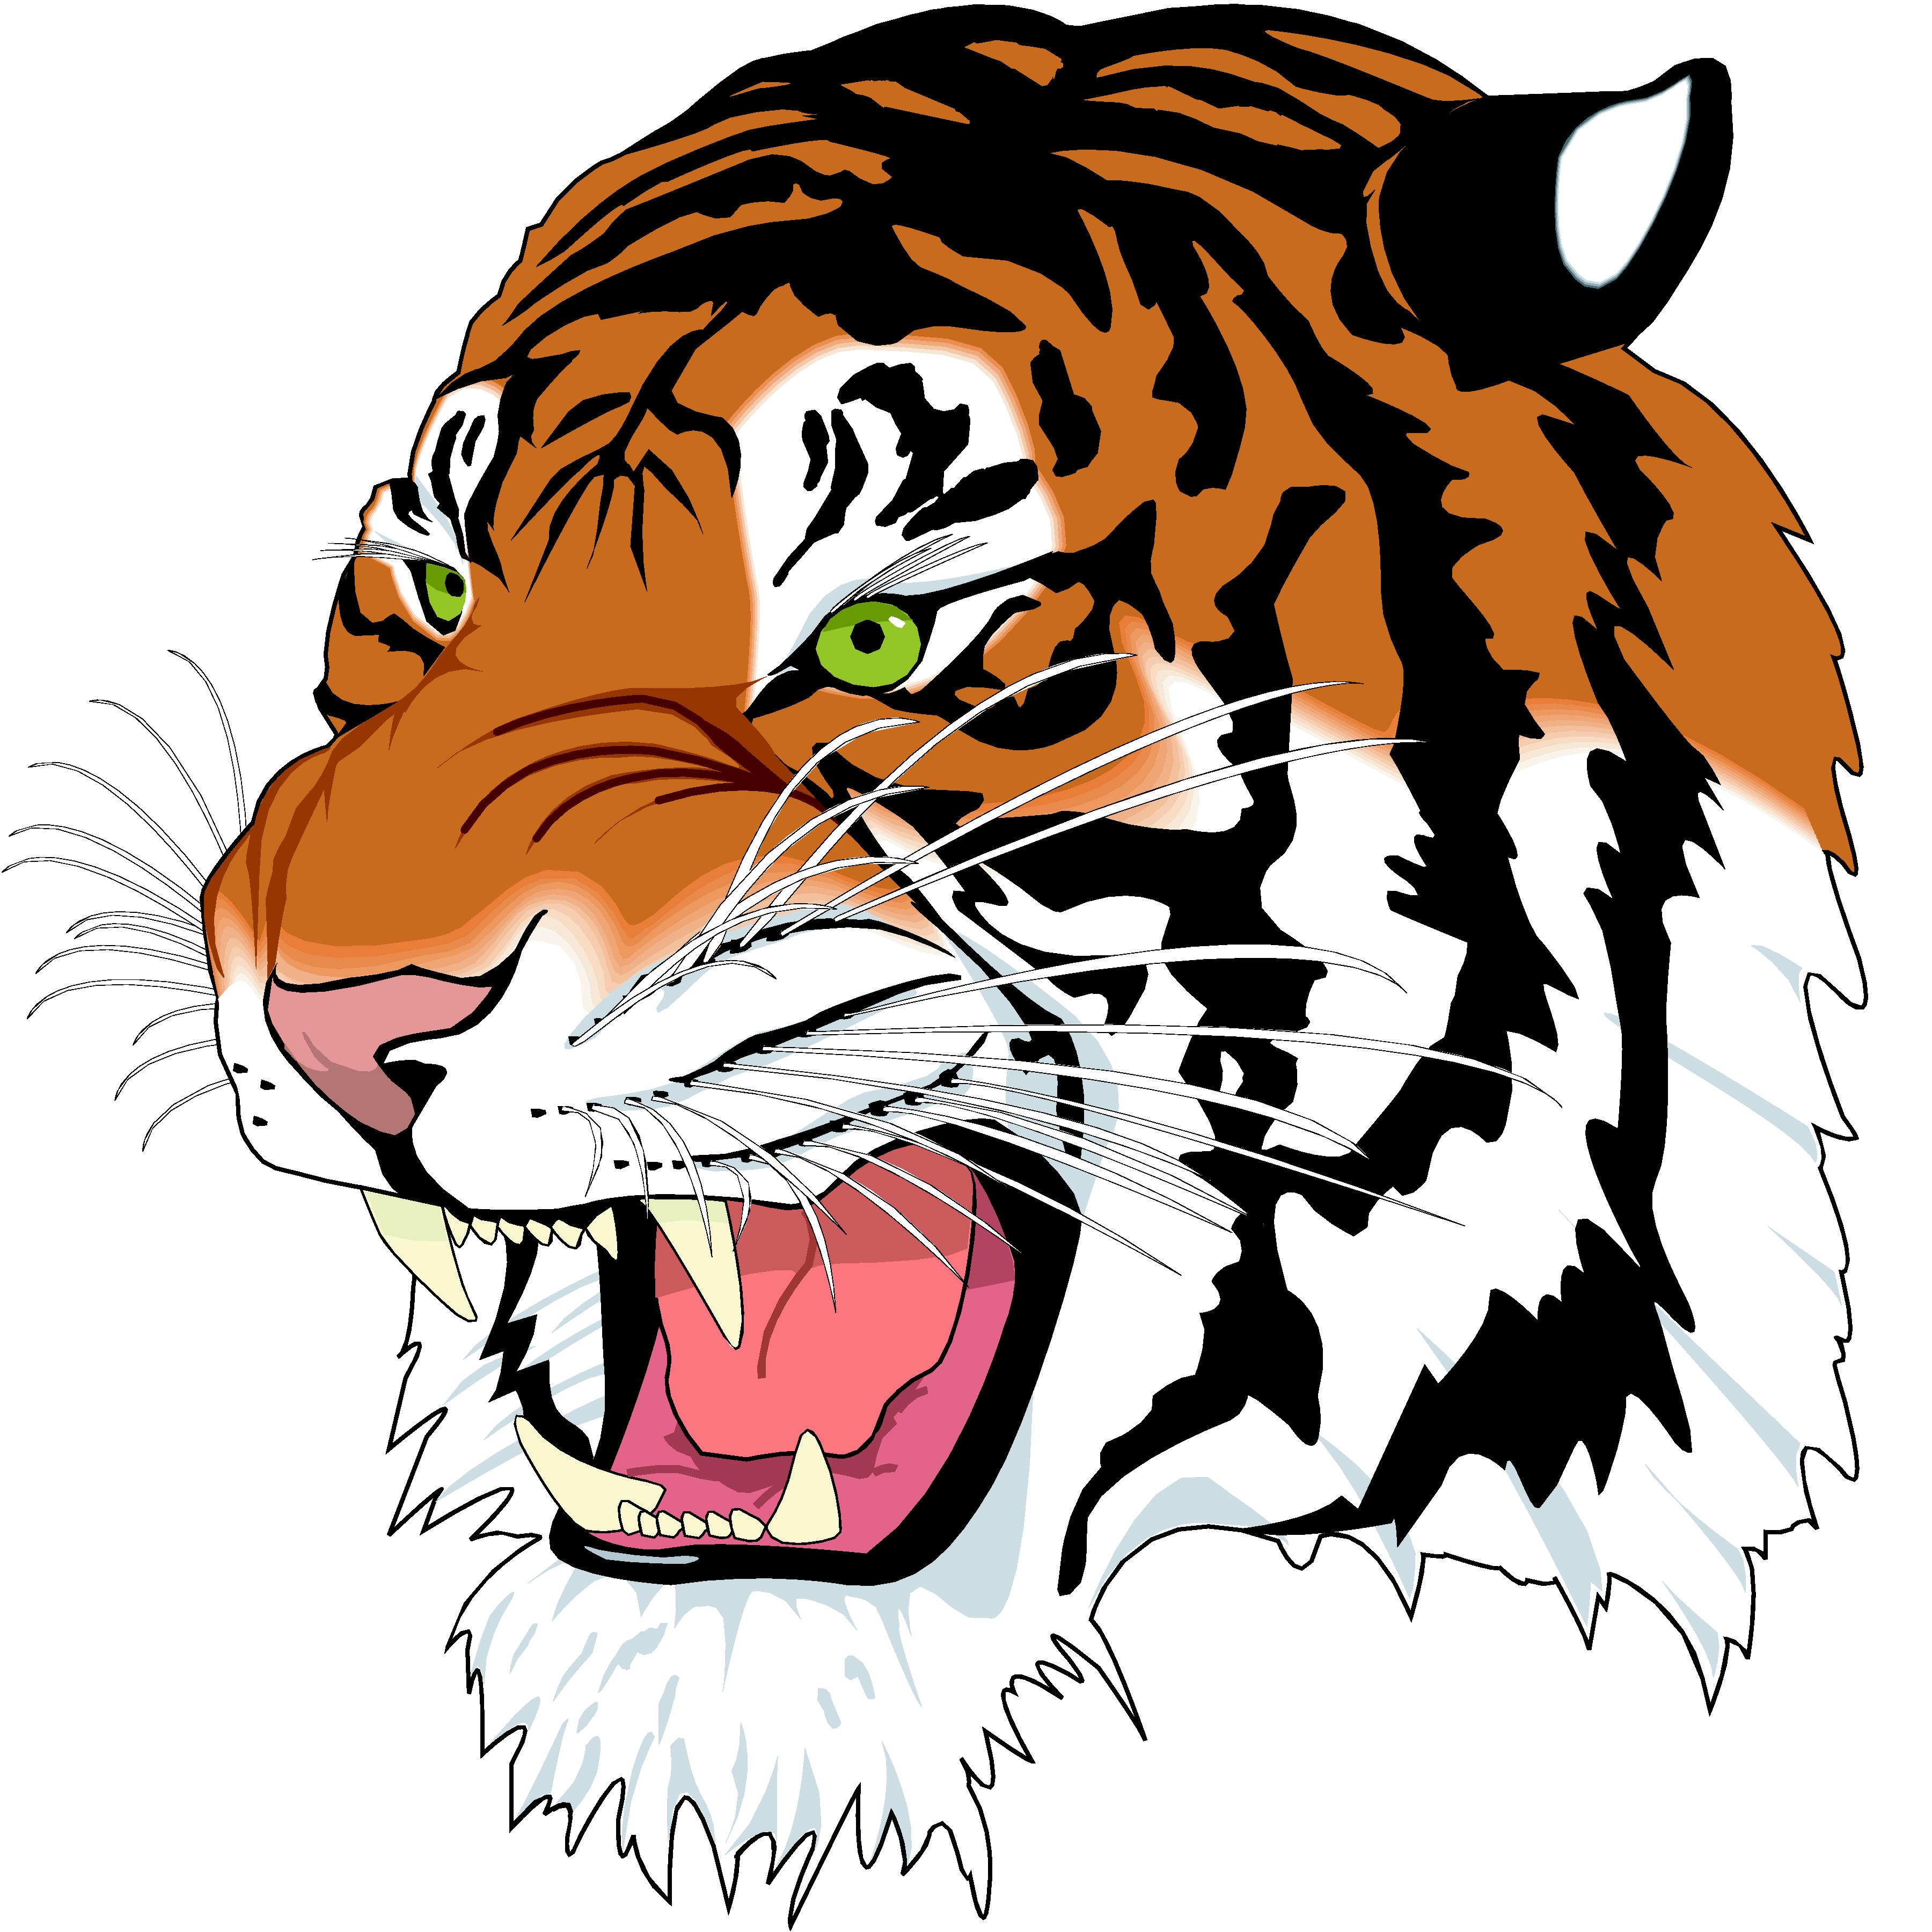 Tiger head, clip art of .